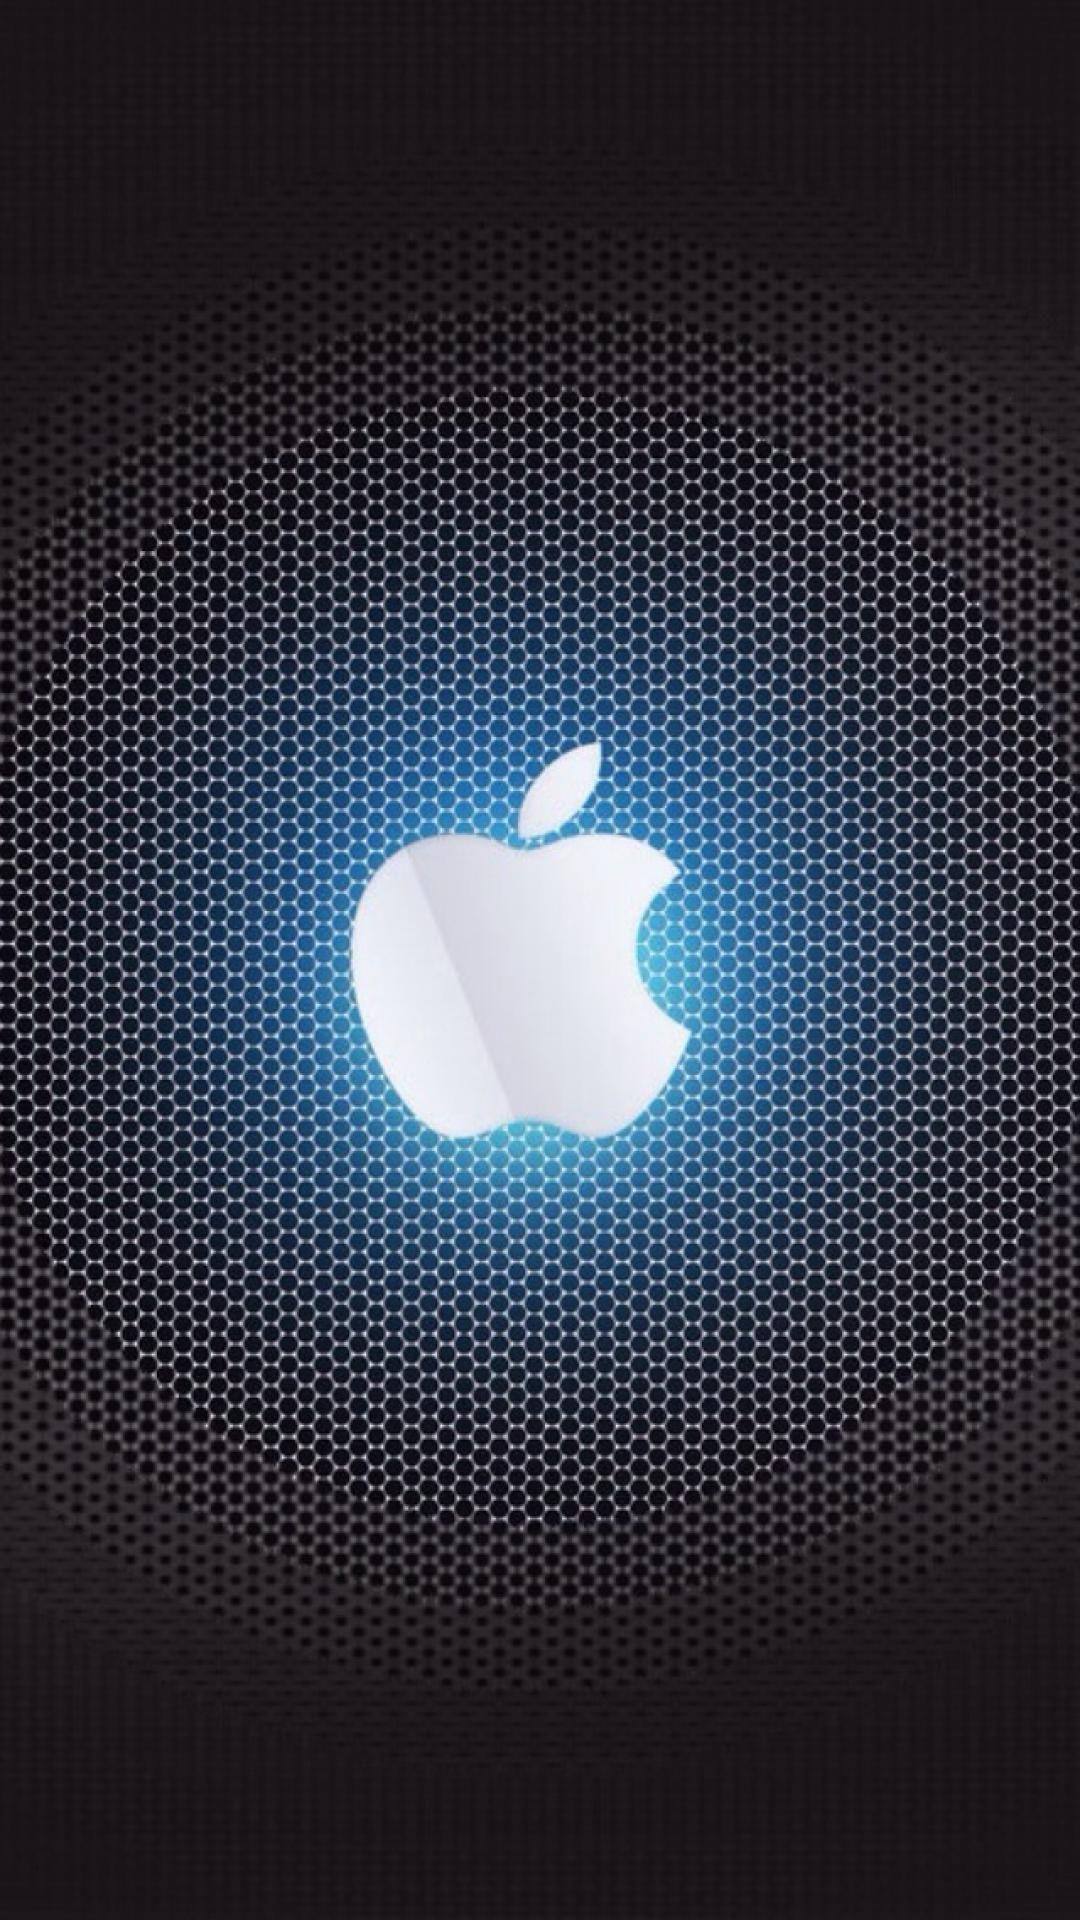 Apple iPhone Logo HD Wallpapers - Wallpaper Cave